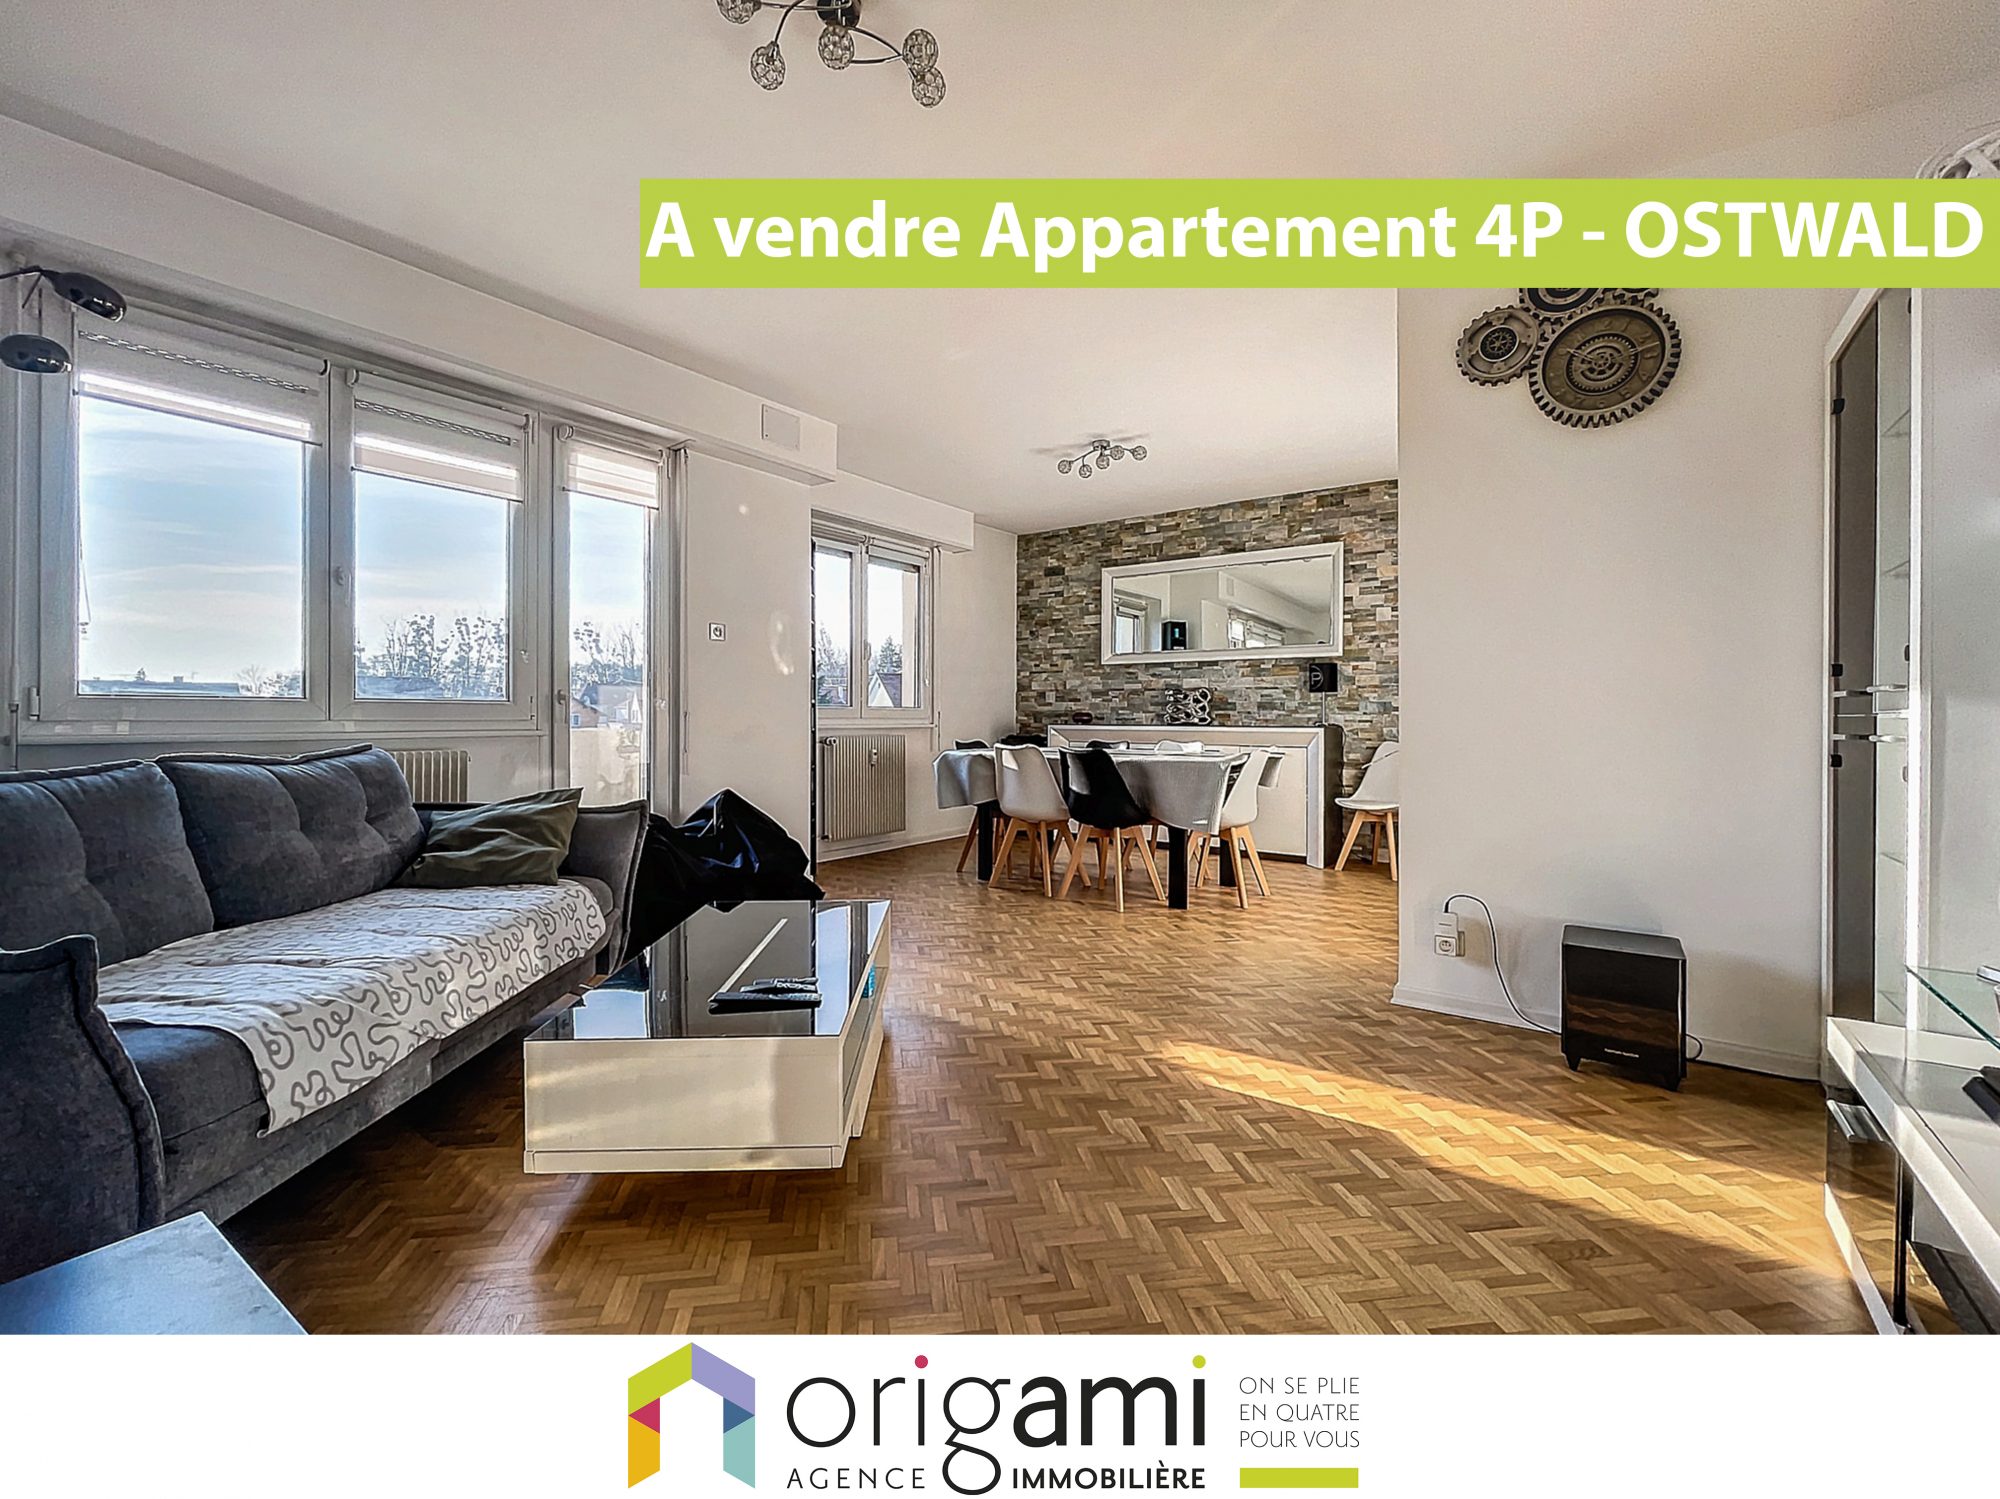 Vente Appartement 96m² 4 Pièces à Ostwald (67540) - Origami